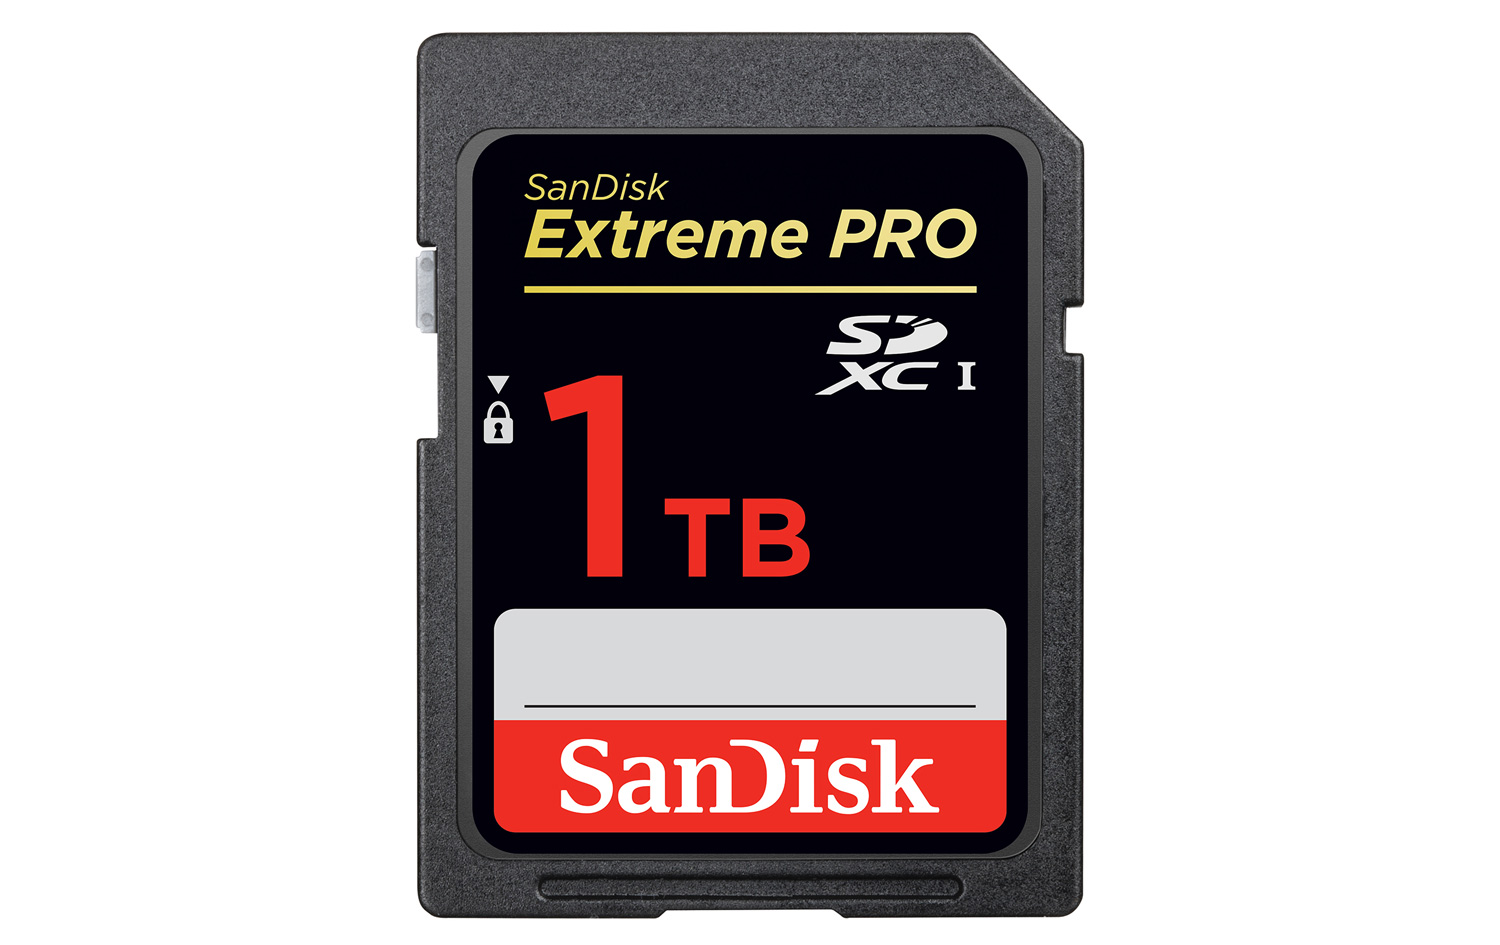 https://www.silicon.fr/wp-content/uploads/2016/09/SanDisk-1TB-SD-card.jpg